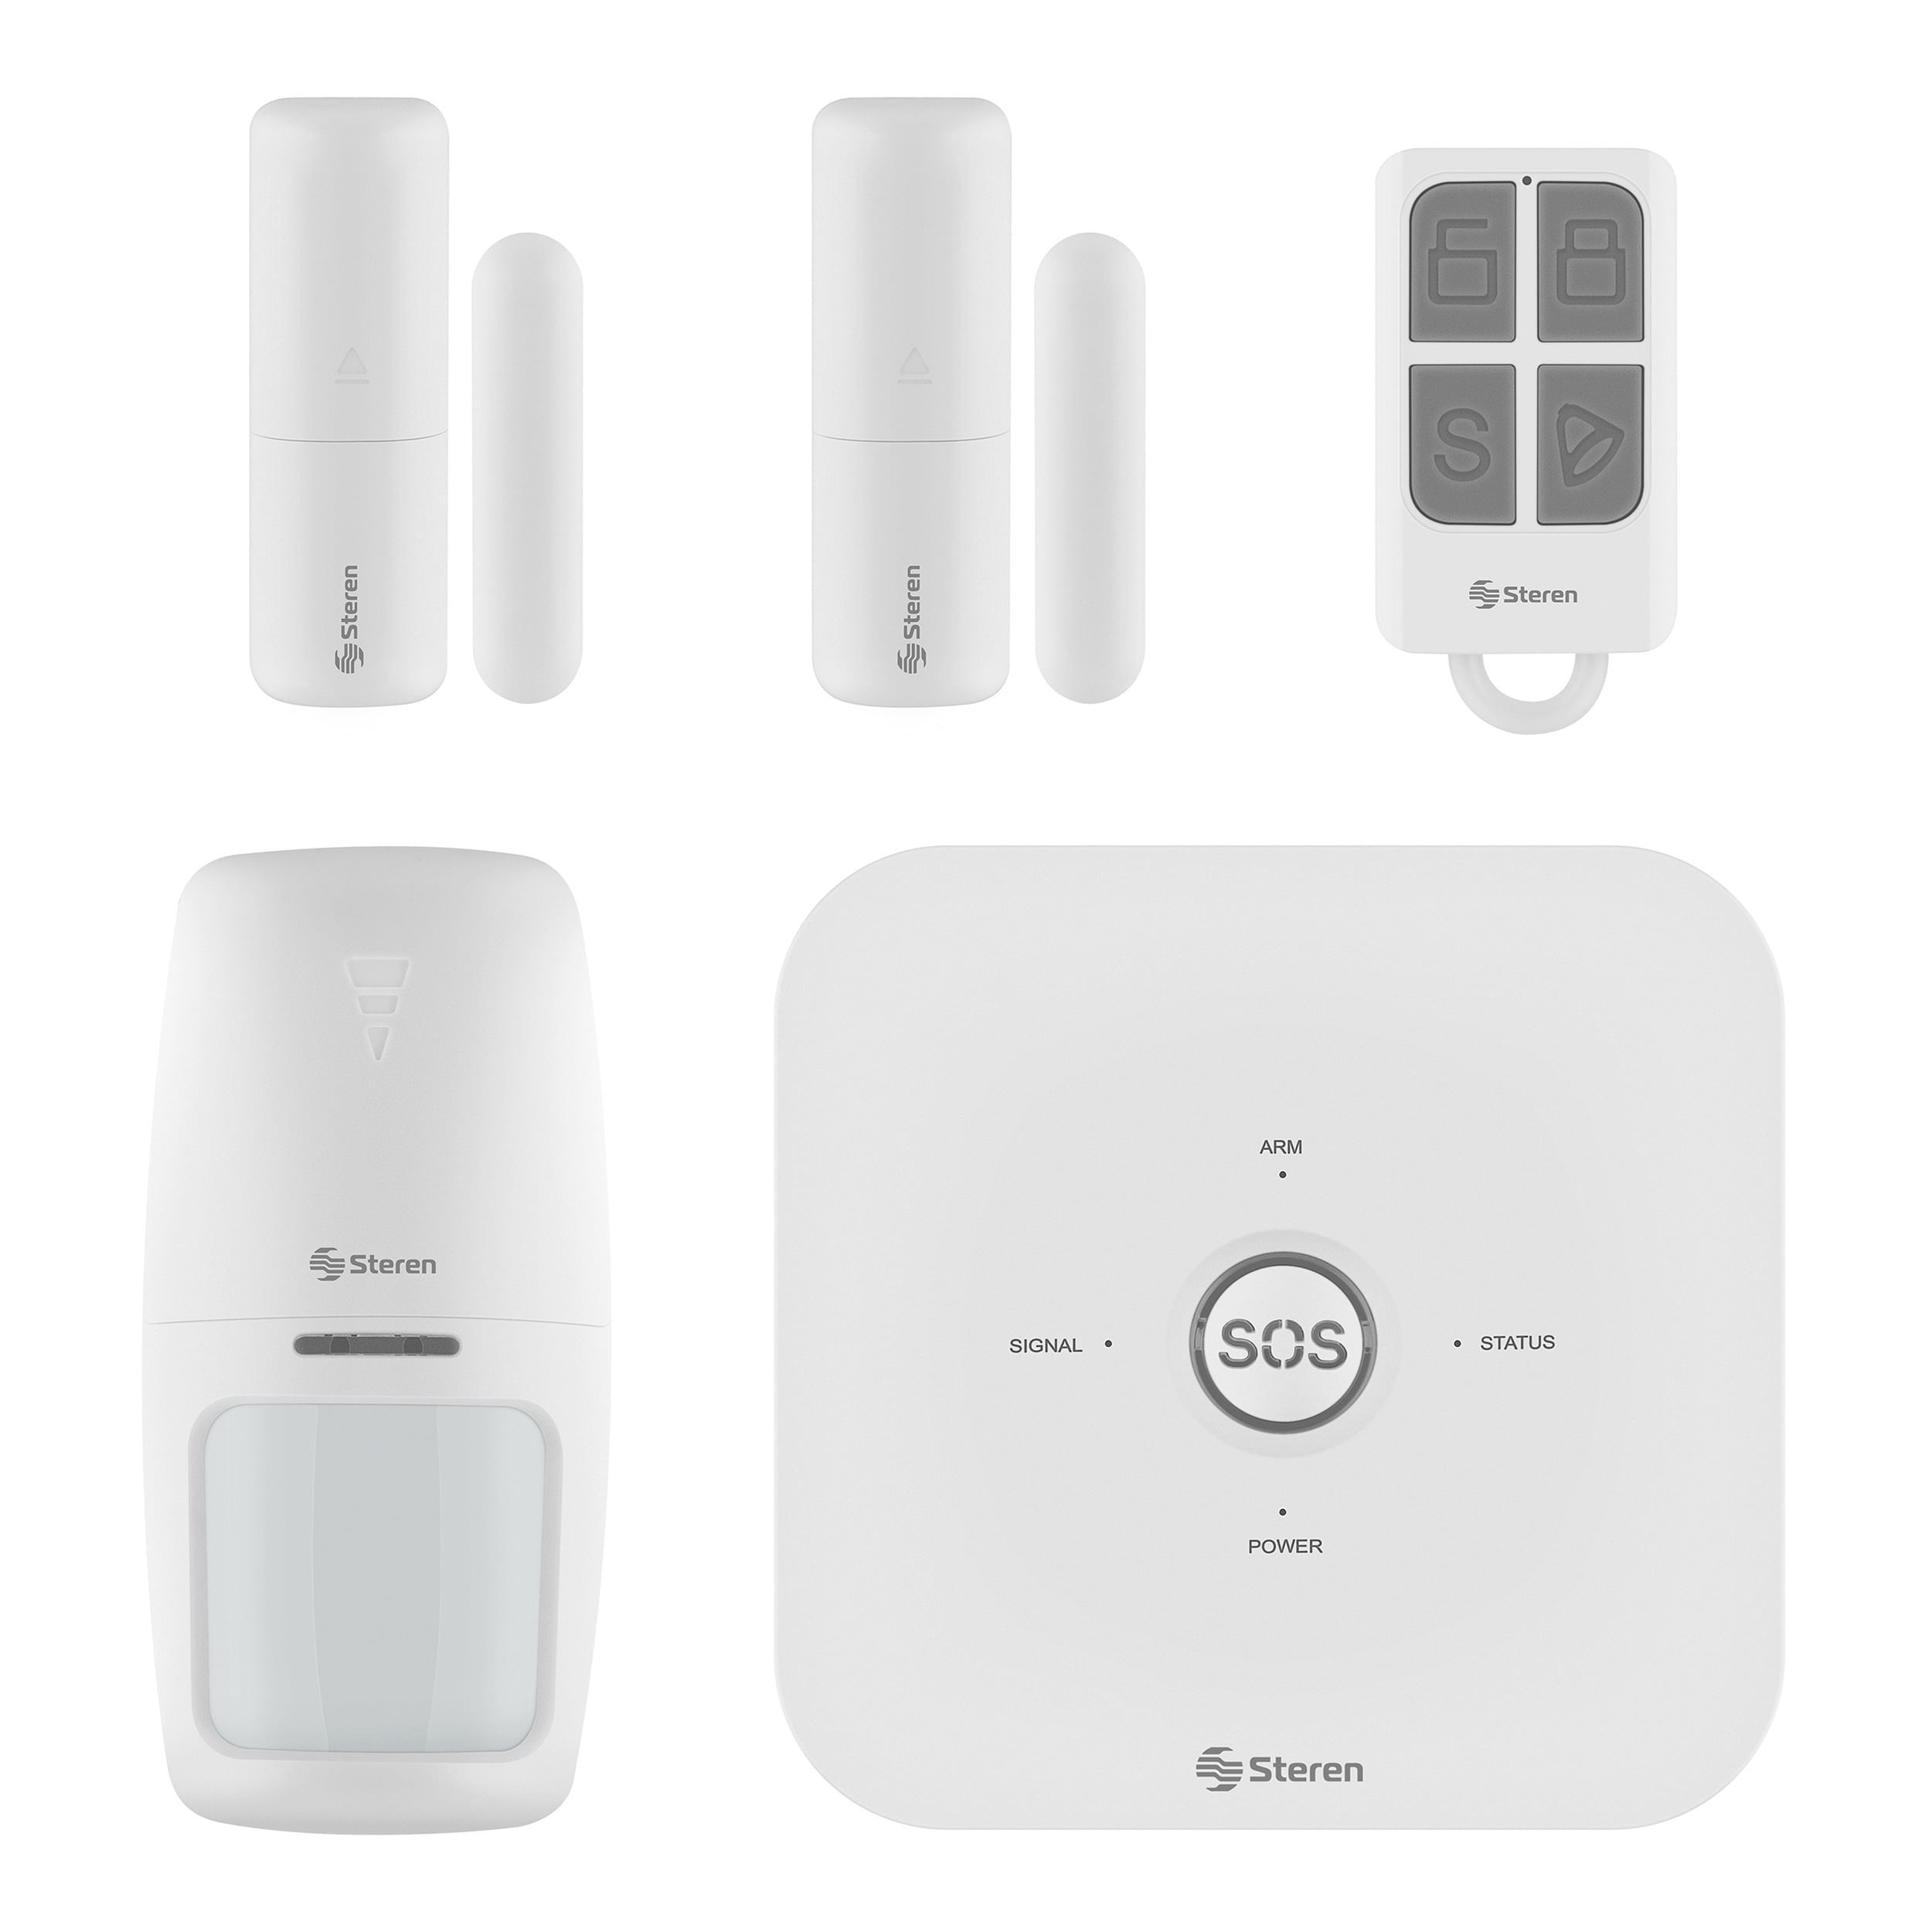 Kit de Alarma Wifi Smart Tuya para controlar desde el Celular